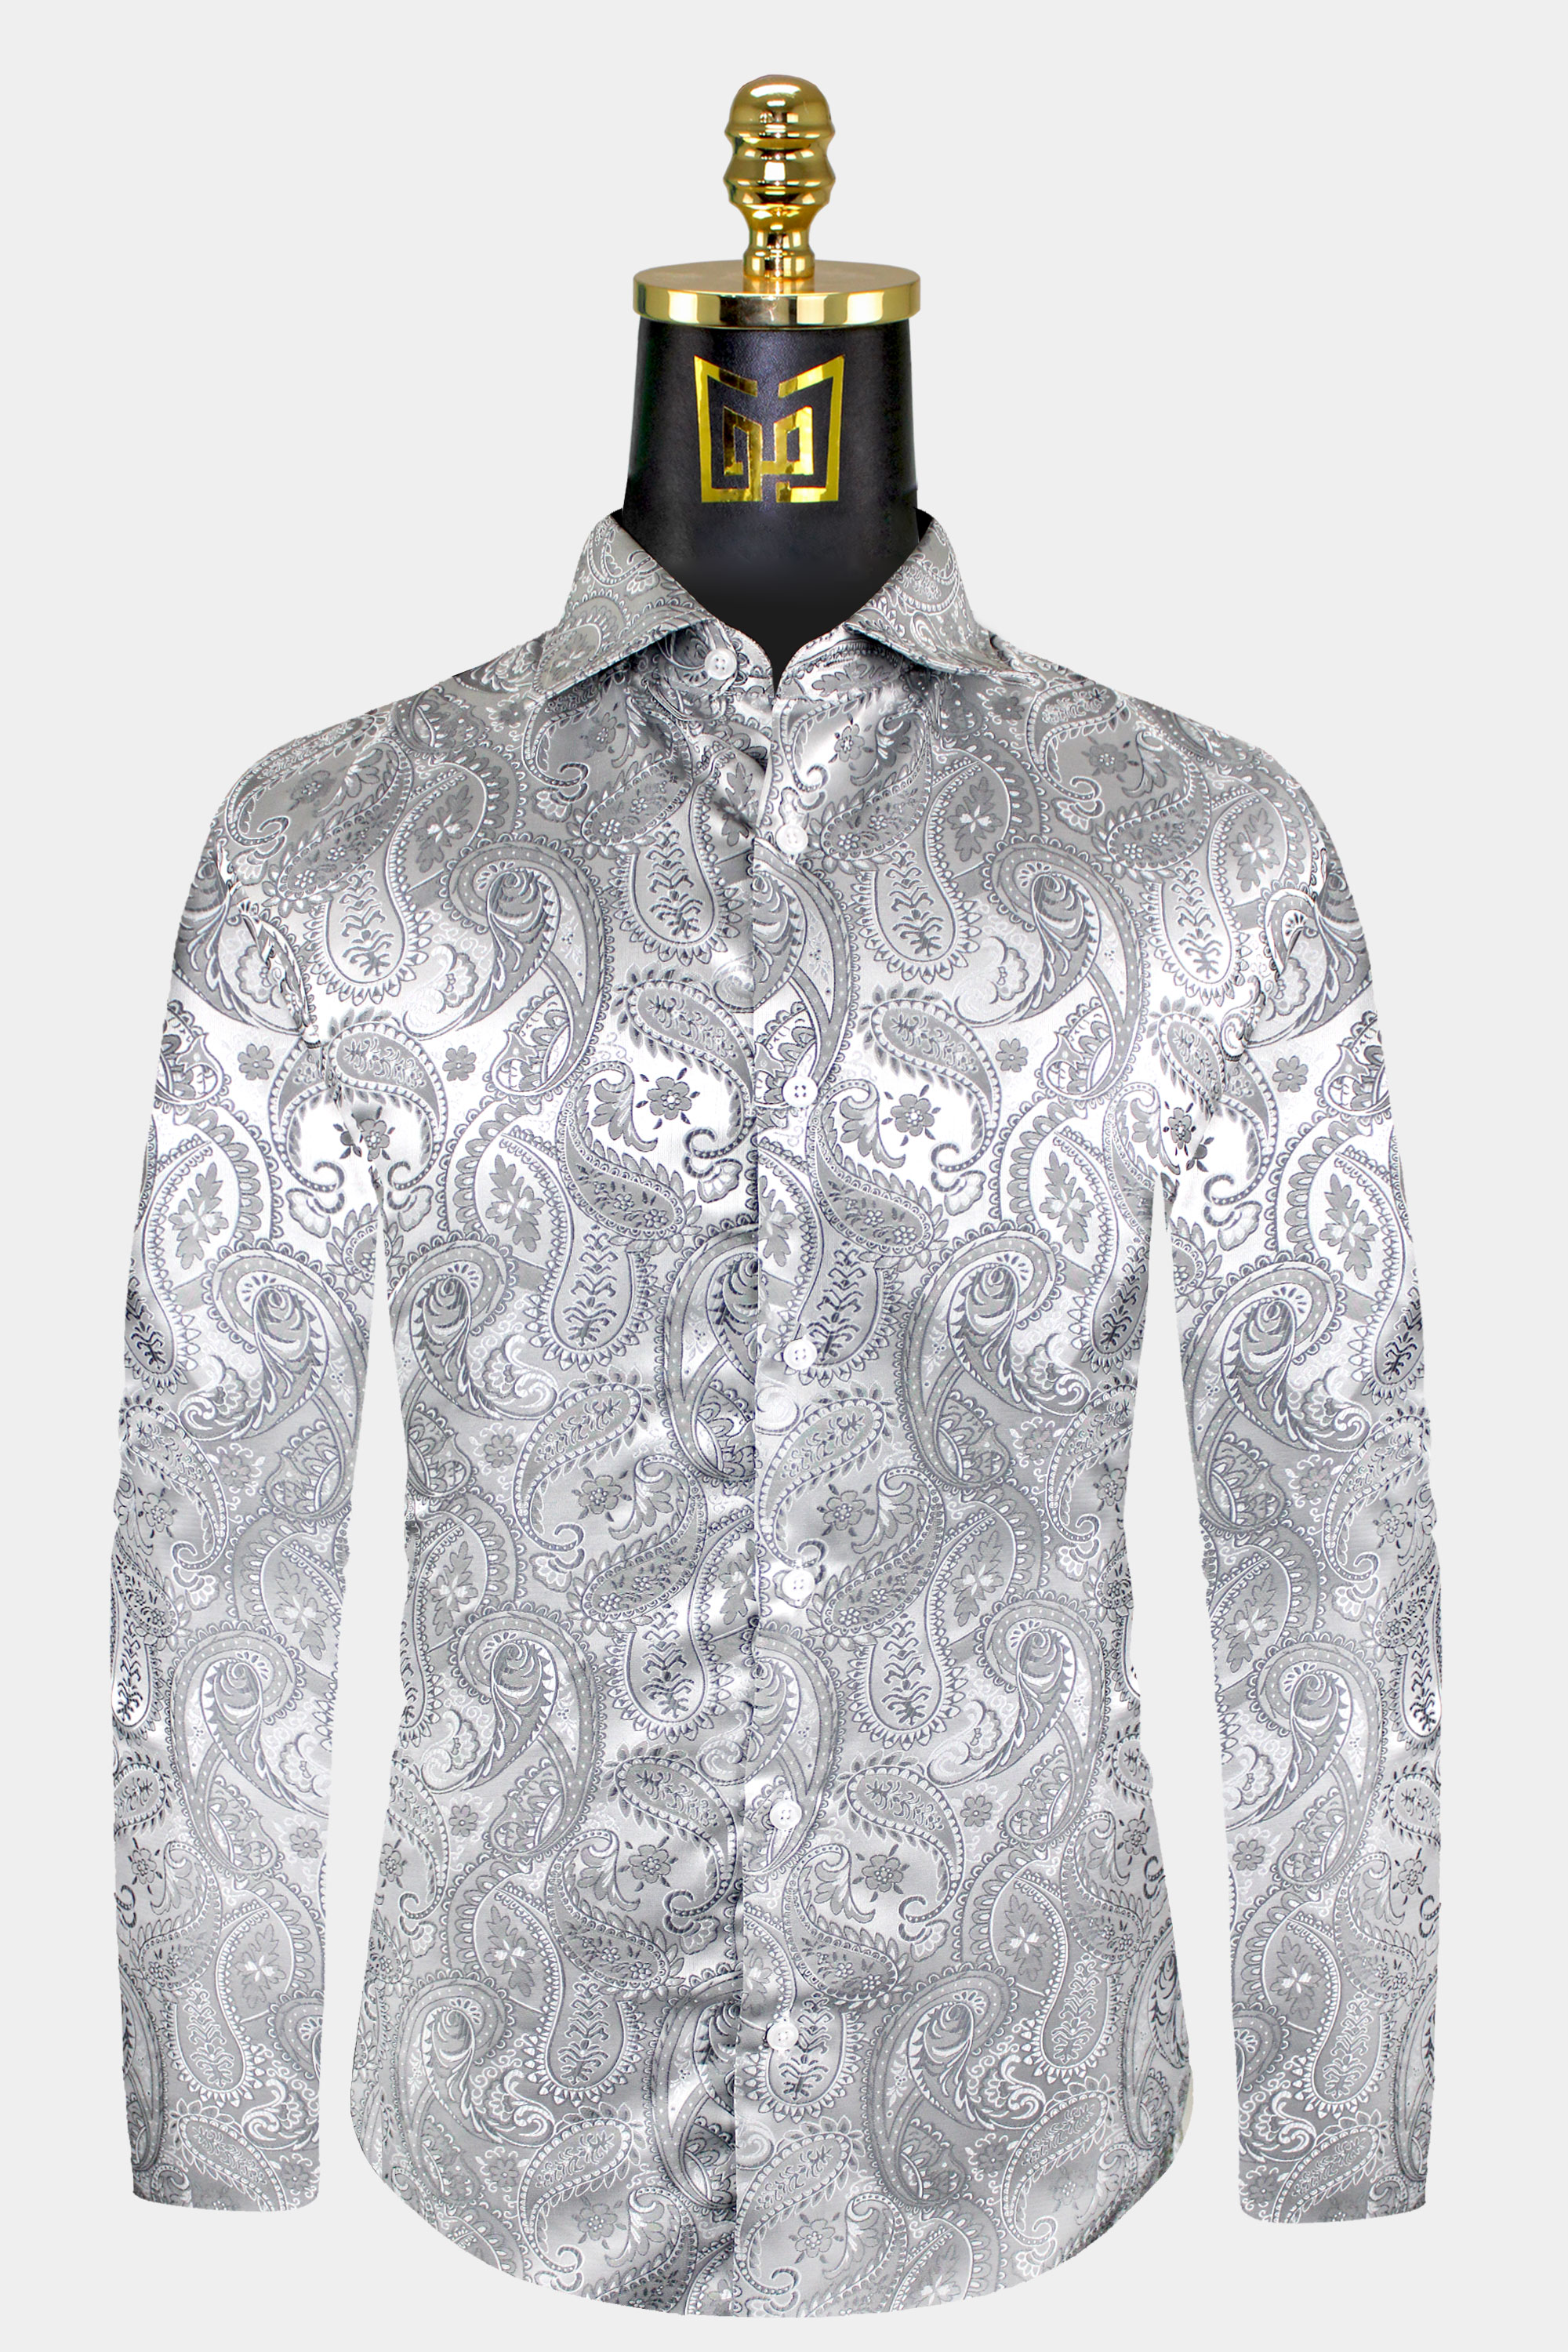 Mens-Silver-Paisley-Shirt-Patterned-Floral-Dress-Shirt-For-Men-from-Gentlemansguru.com